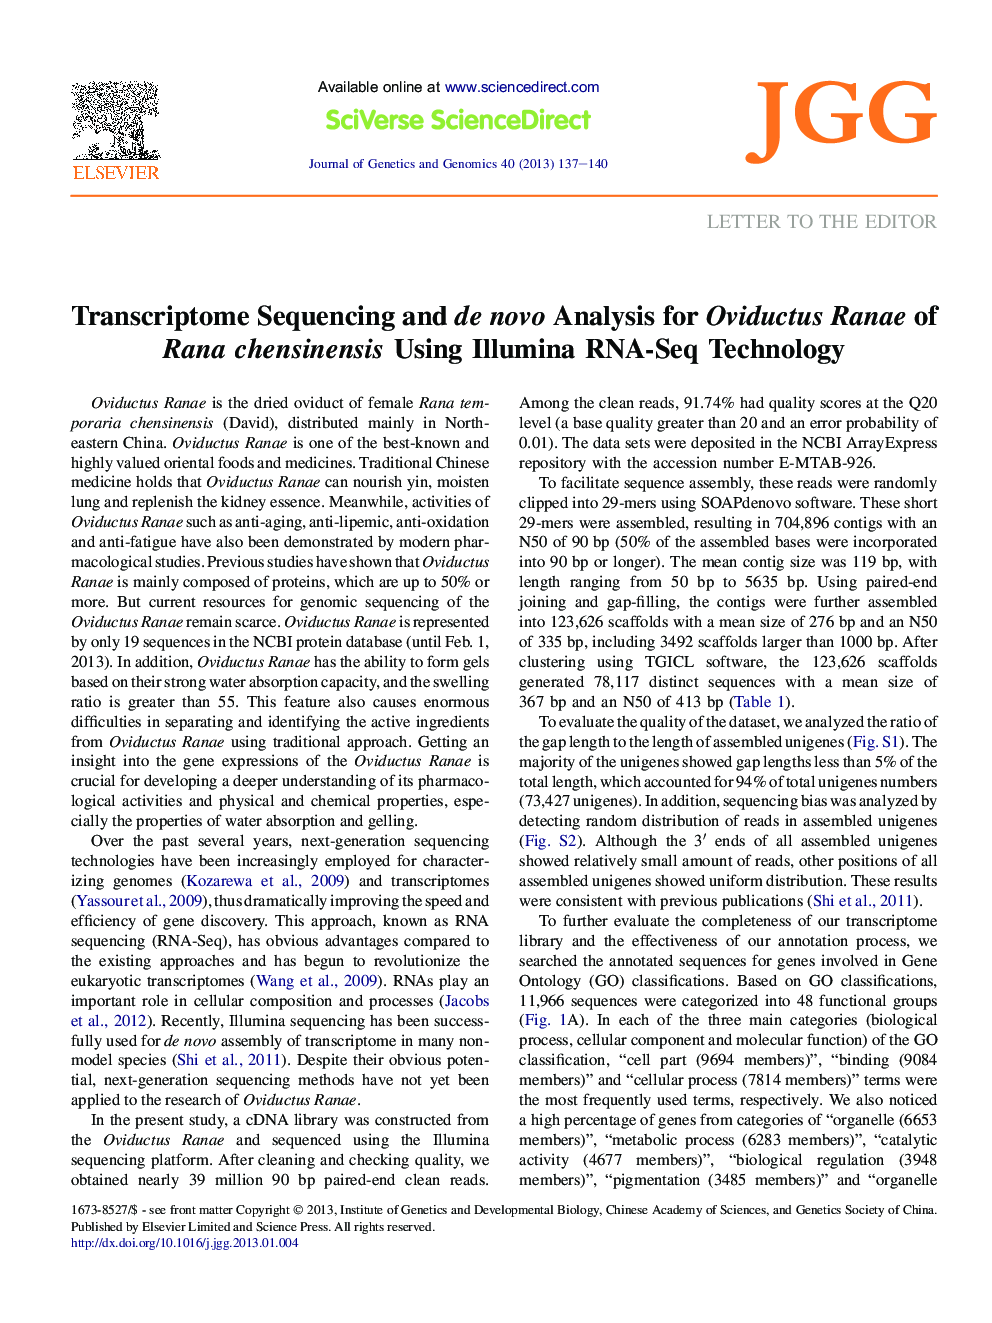 Transcriptome Sequencing and de novo Analysis for Oviductus Ranae of Rana chensinensis Using Illumina RNA-Seq Technology